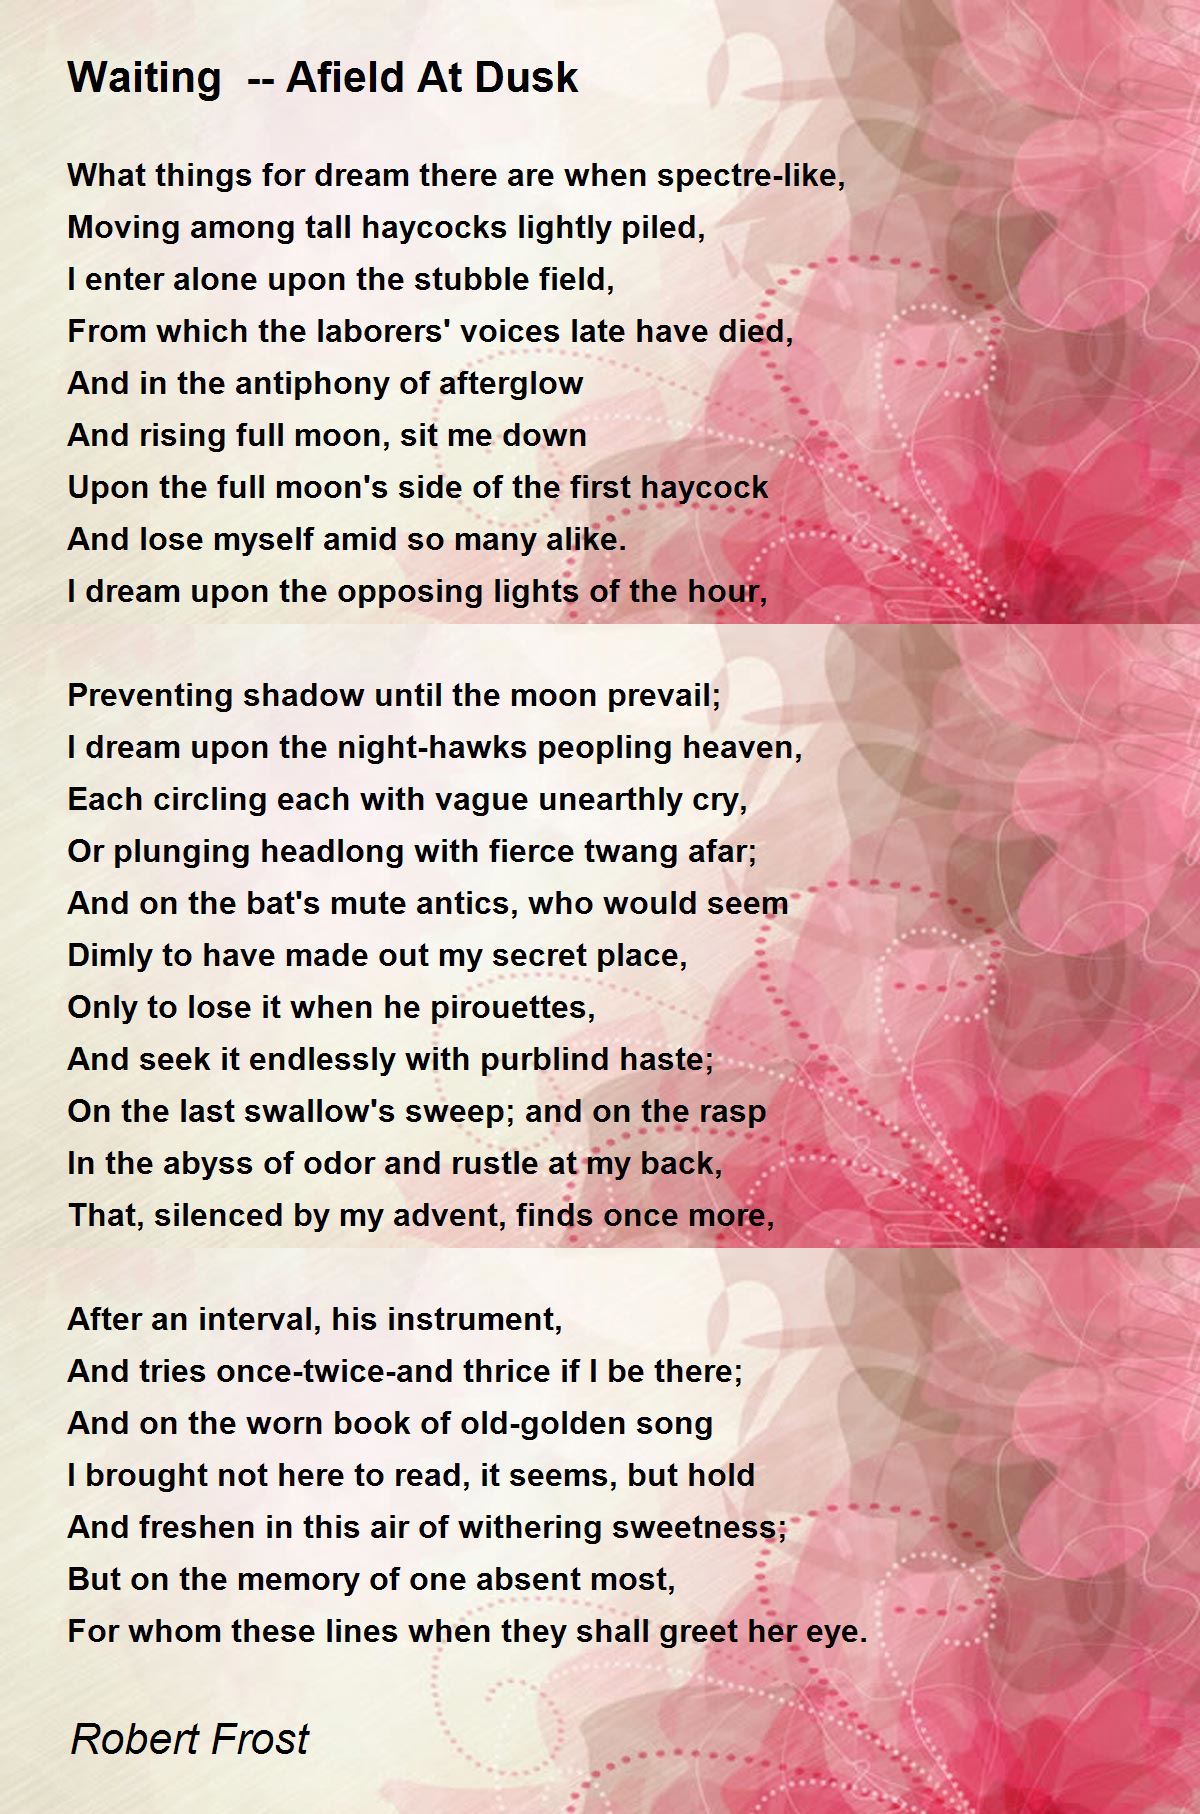 Waiting -- Afield At Dusk Poem by Robert Frost - Poem Hunter